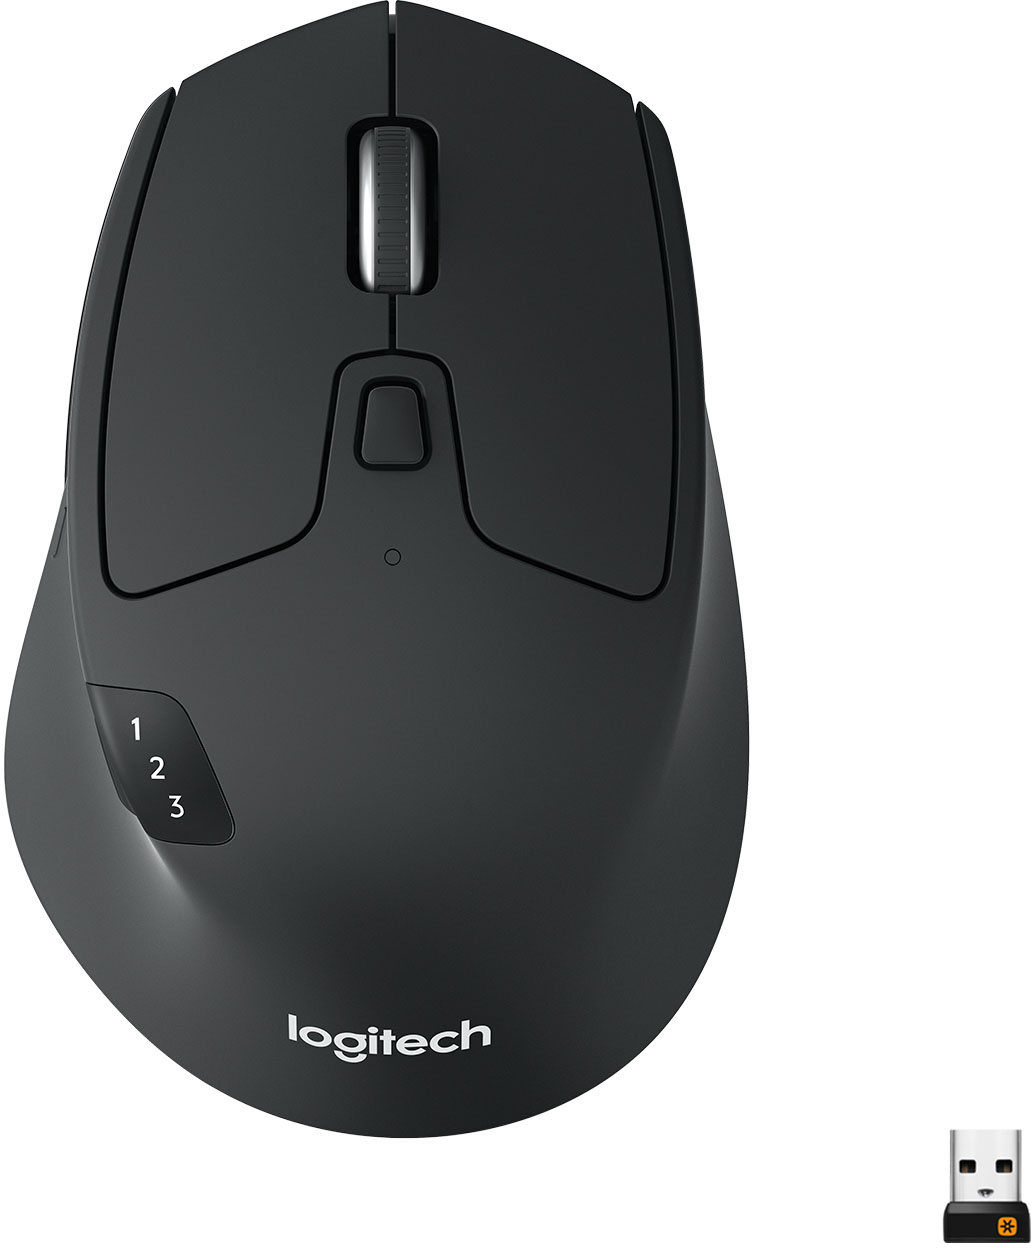 logitech m720 mouse software download